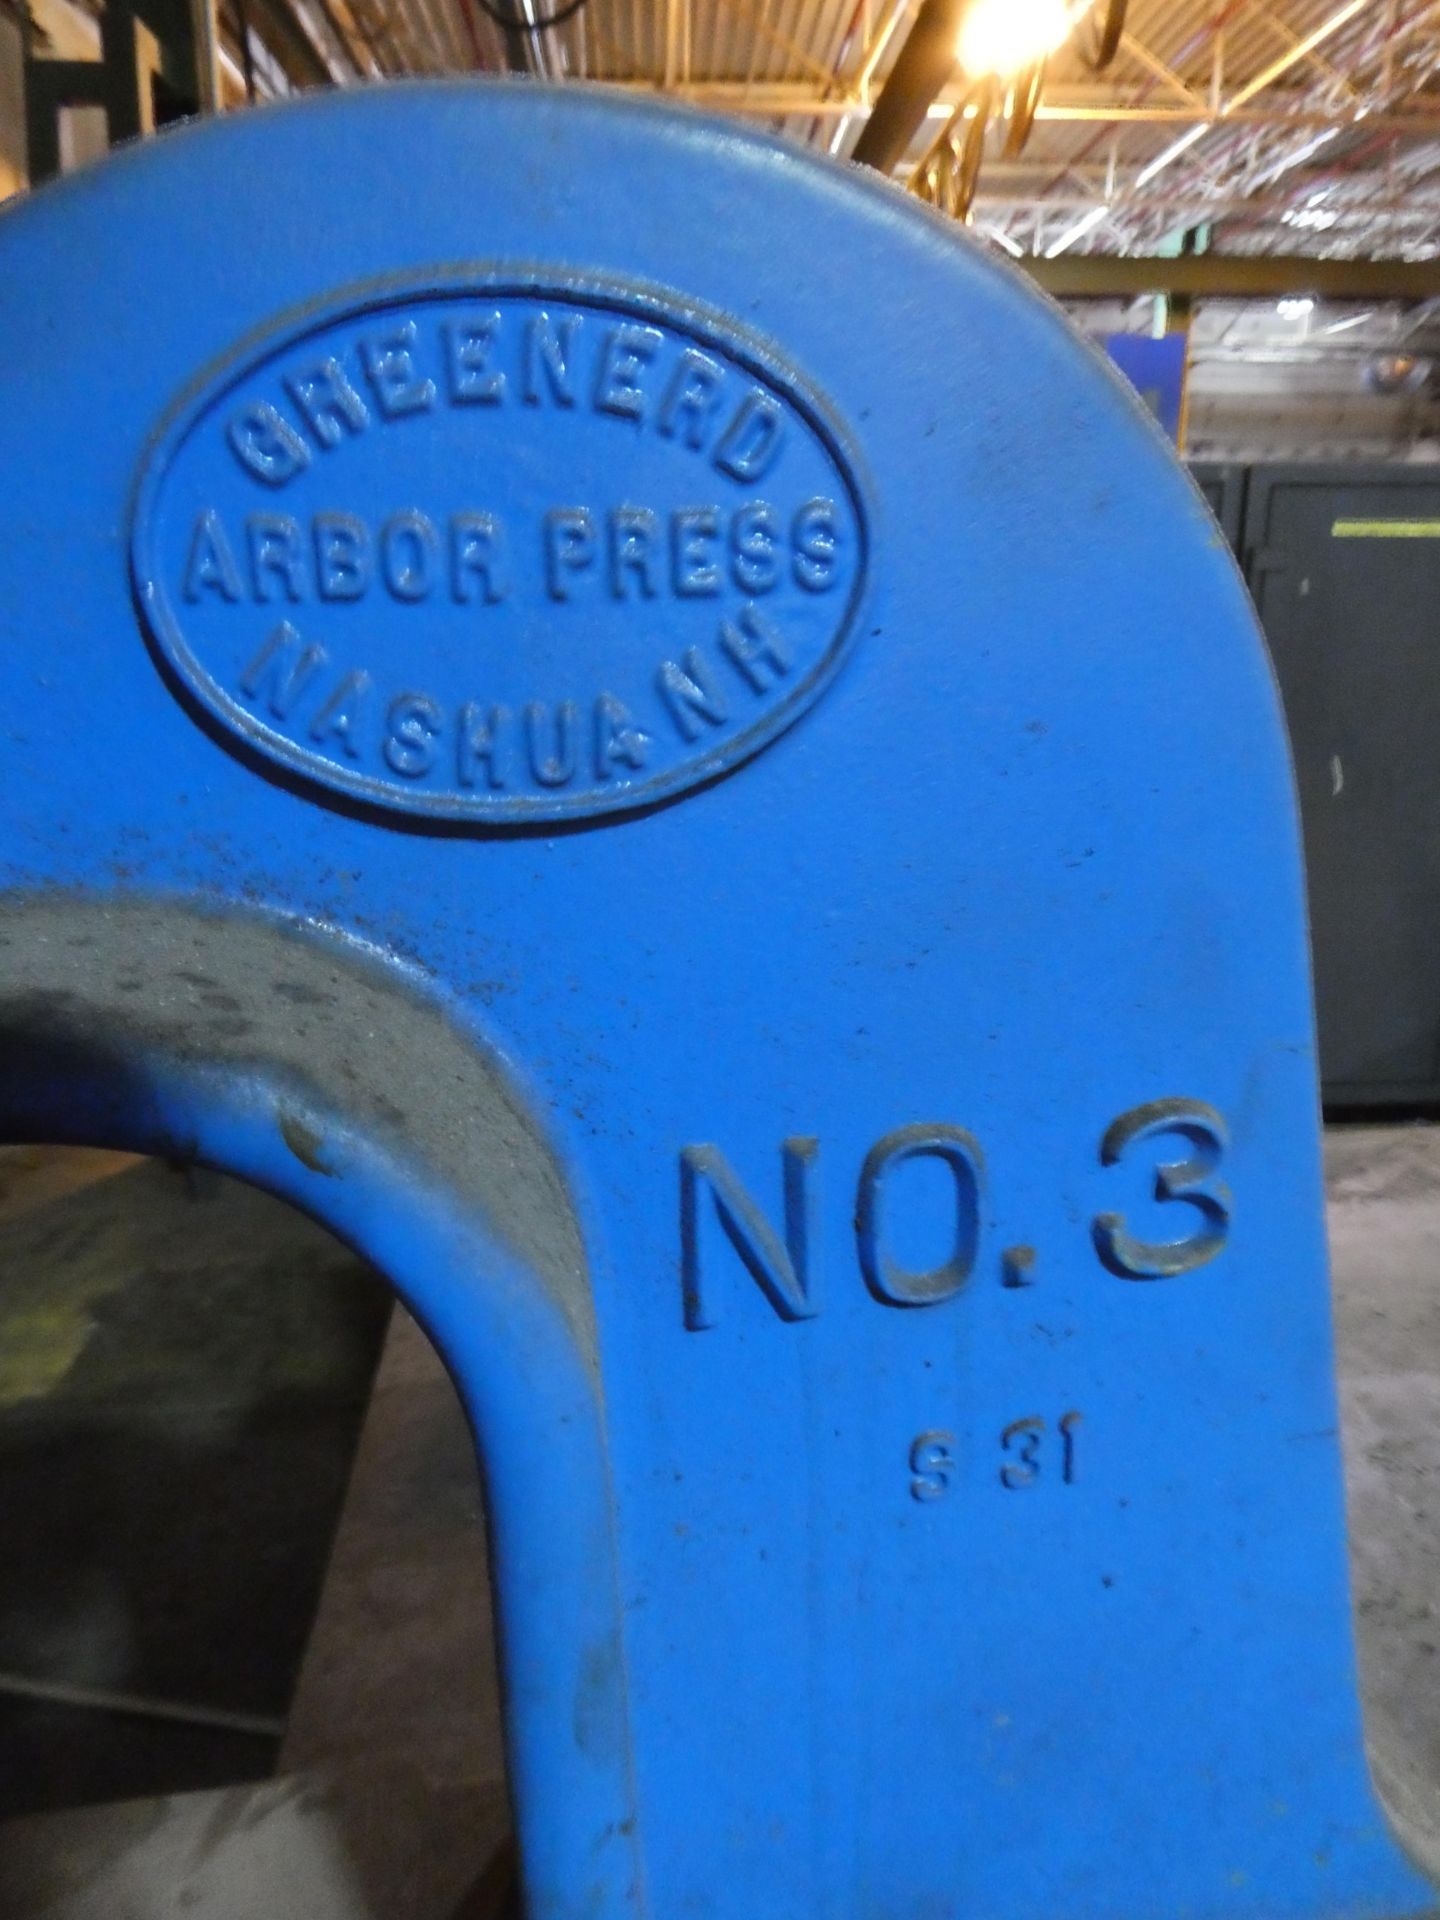 Greenerd Arbor Press - Image 2 of 2